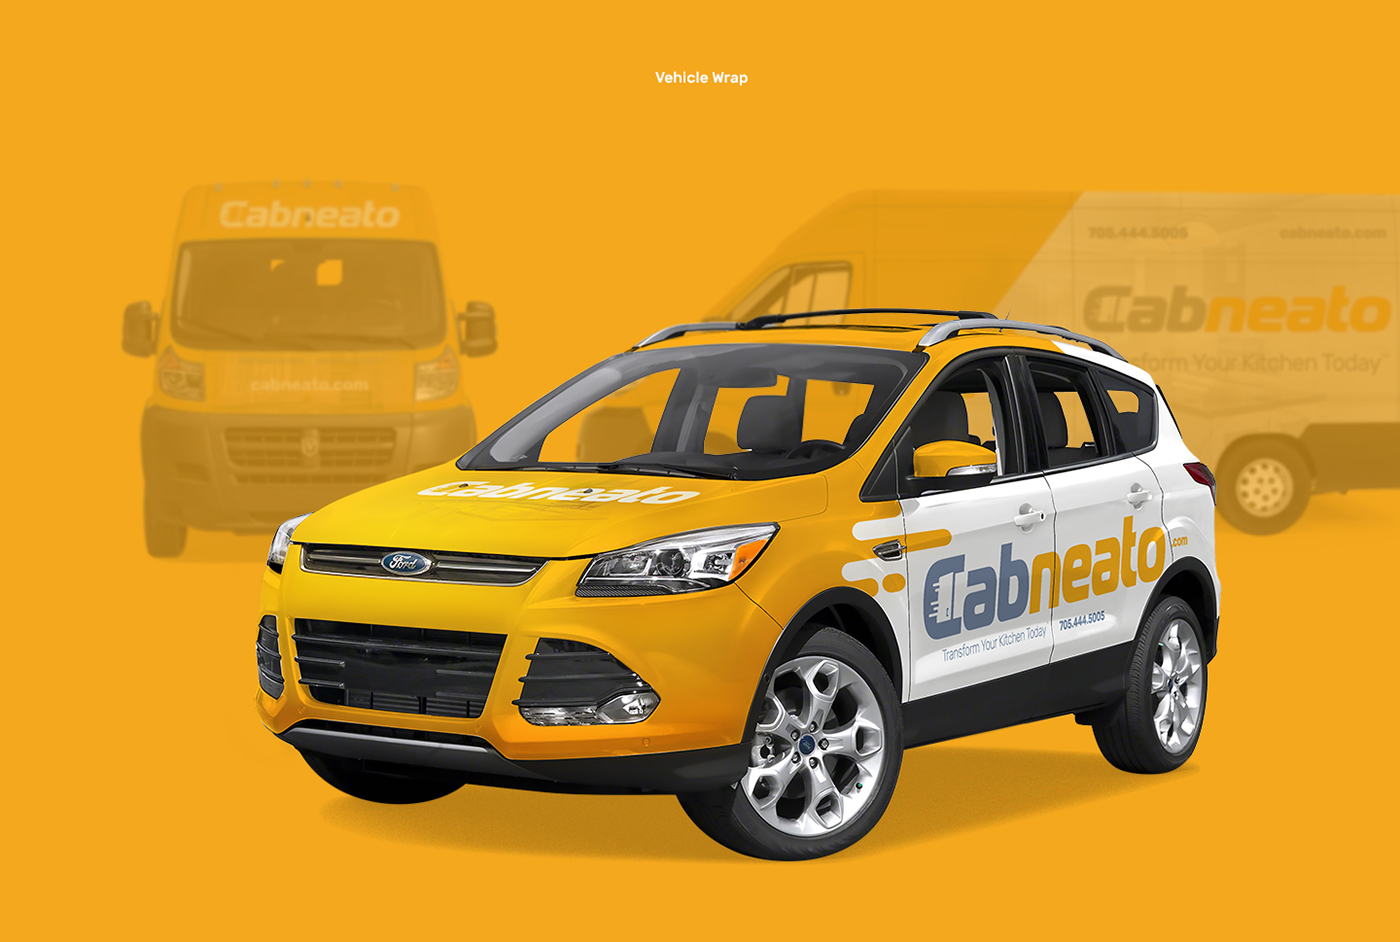 branding  brand guidelines Website kitchen speed lines modern UI Golden Ratio Vehicle Wrap stationary